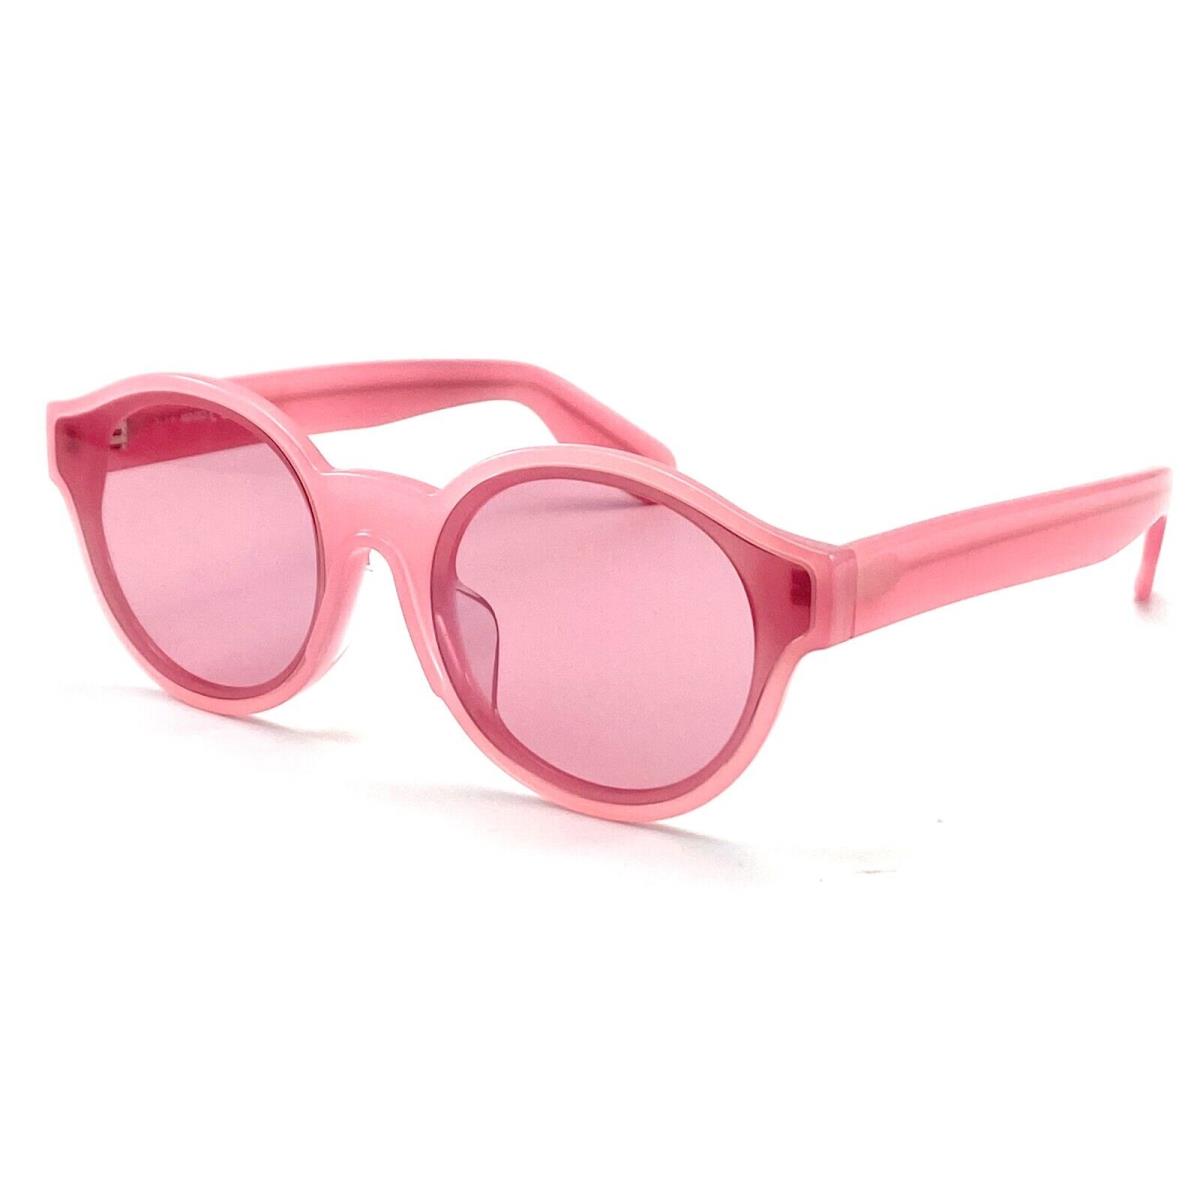 Kenzo Paris KZ40008F 72Y Pink Sunglasses 60-19 150 W/case - Pink Frame, Pink Lens